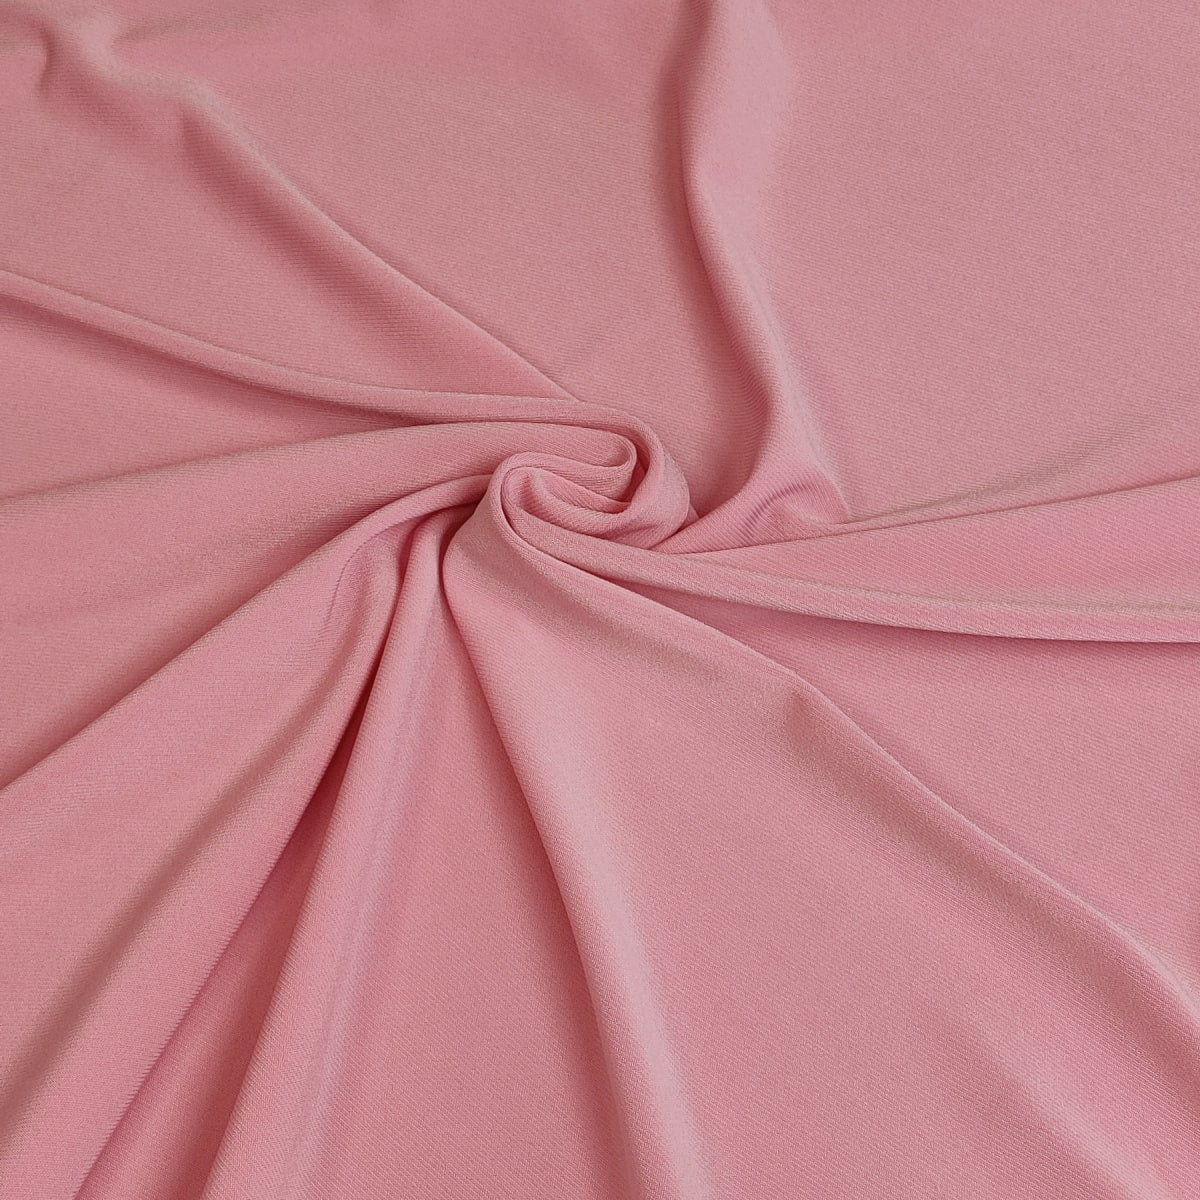 Mia's Fabrics Inc, Money Print Fabric Metallic Pink 100 Dollar Bills  Stretch Spandex Fabric, Sold by the Yard pick a Size -  Canada